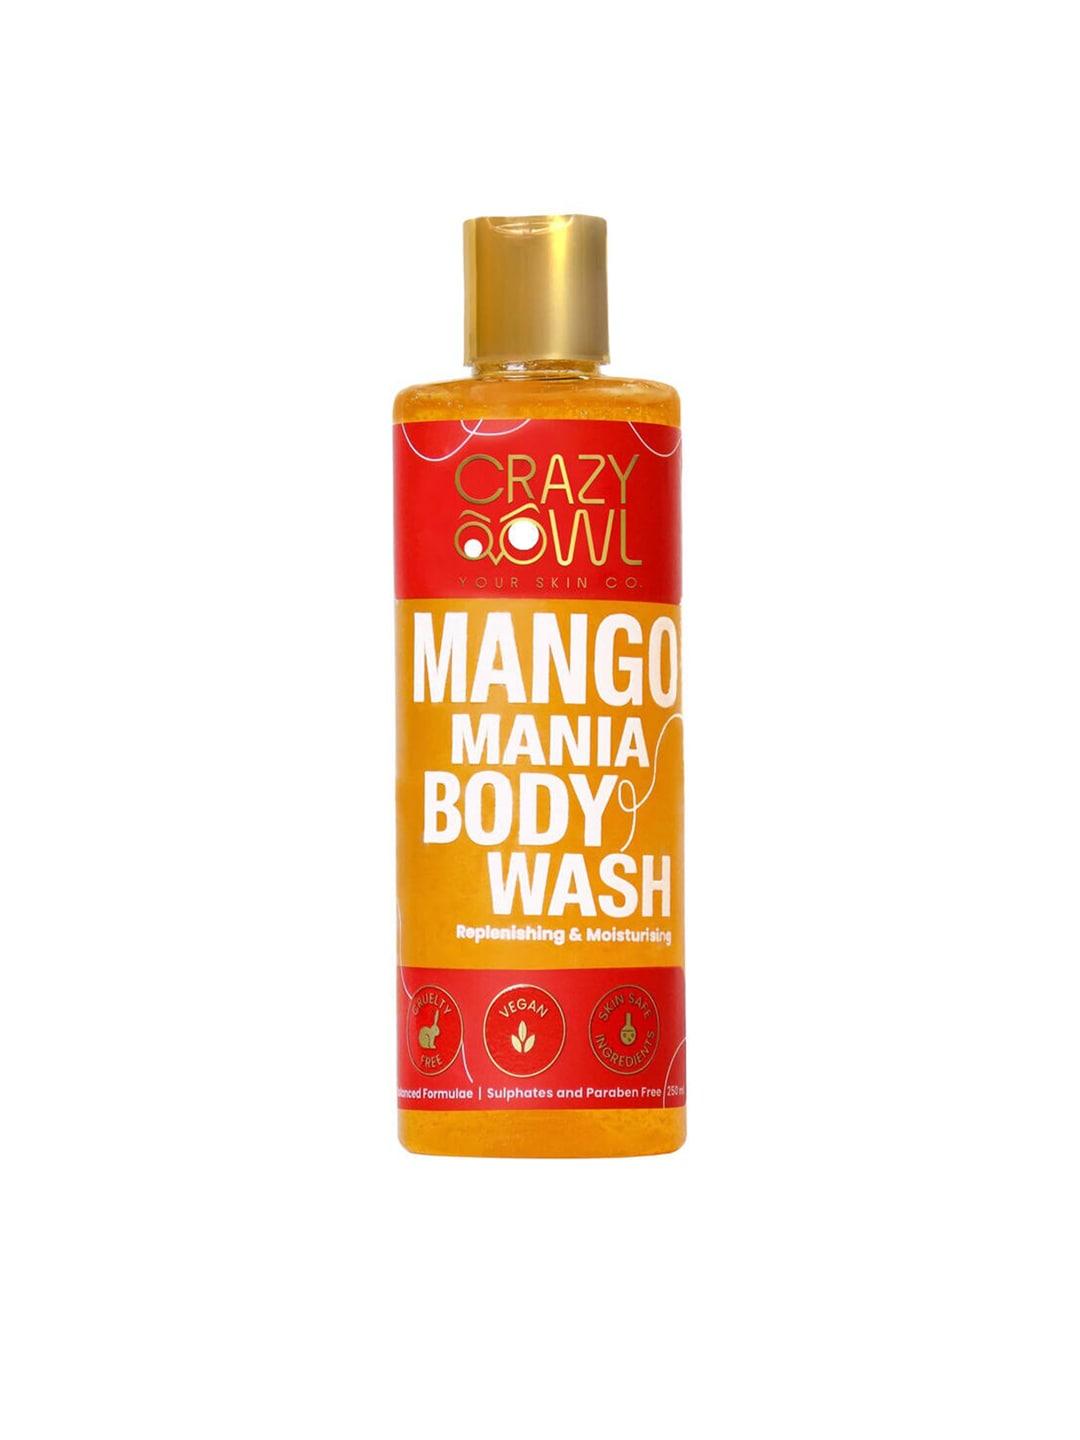 CRAZY OWL Mango Mania Body Wash For Replenishing & Moisturising 250ml